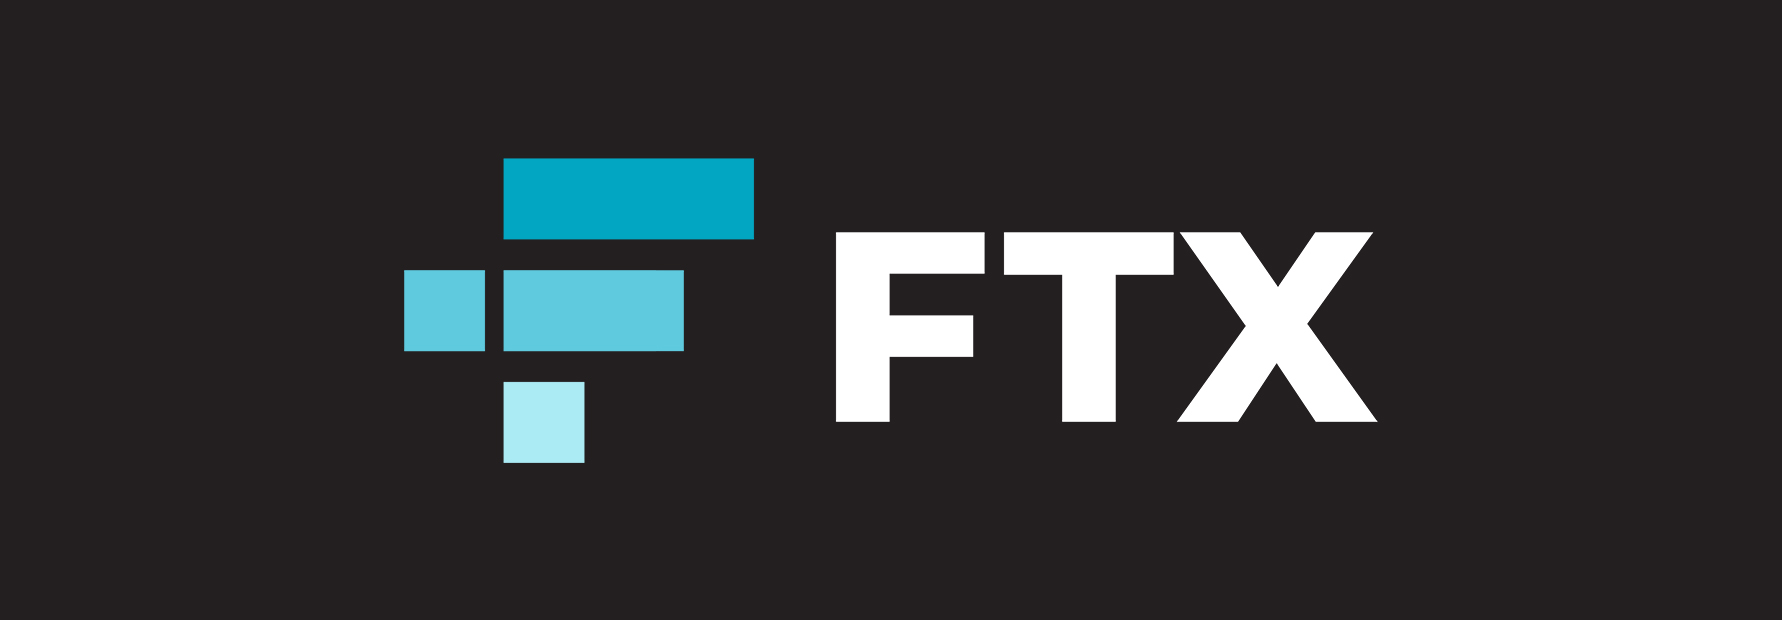 ftx-logo.jpg